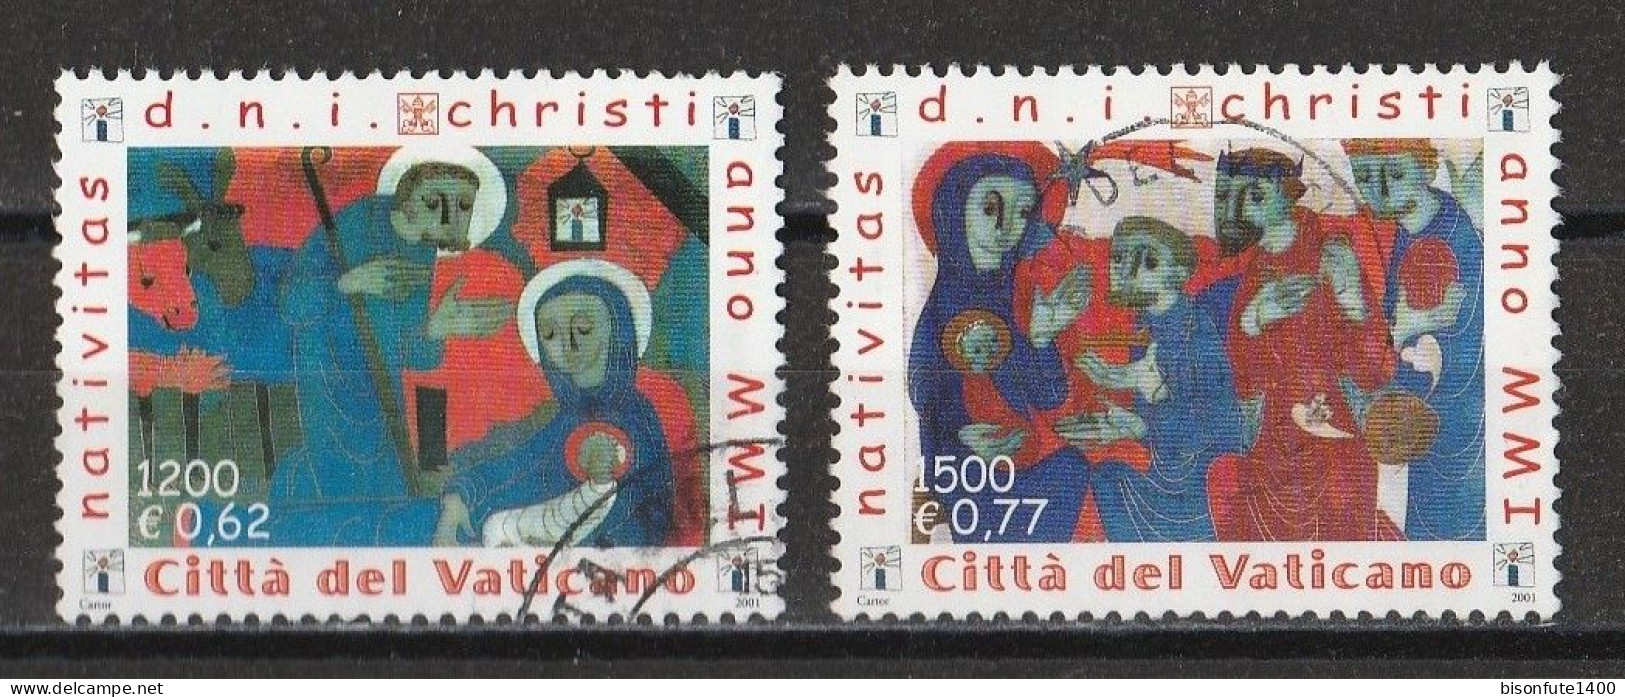 Vatican 2001 : Timbres Yvert & Tellier N° 1238 - 1239 - 1240 - 1246 - 1247 - 1248 Et 1249 Oblitérés. - Usati